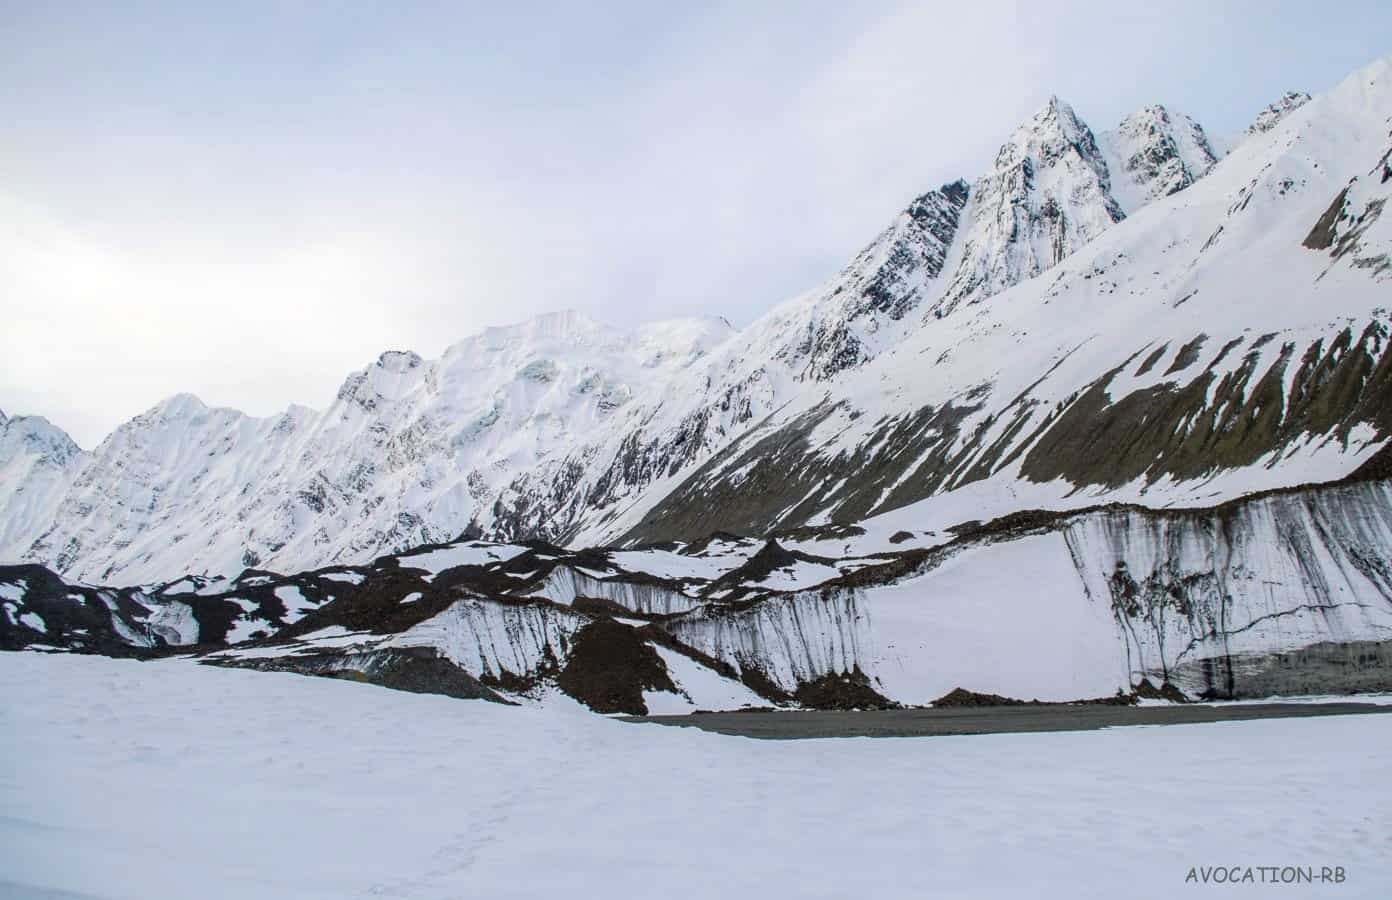 Baspa glacier snout [Lamkhaga pass expedition 2015]